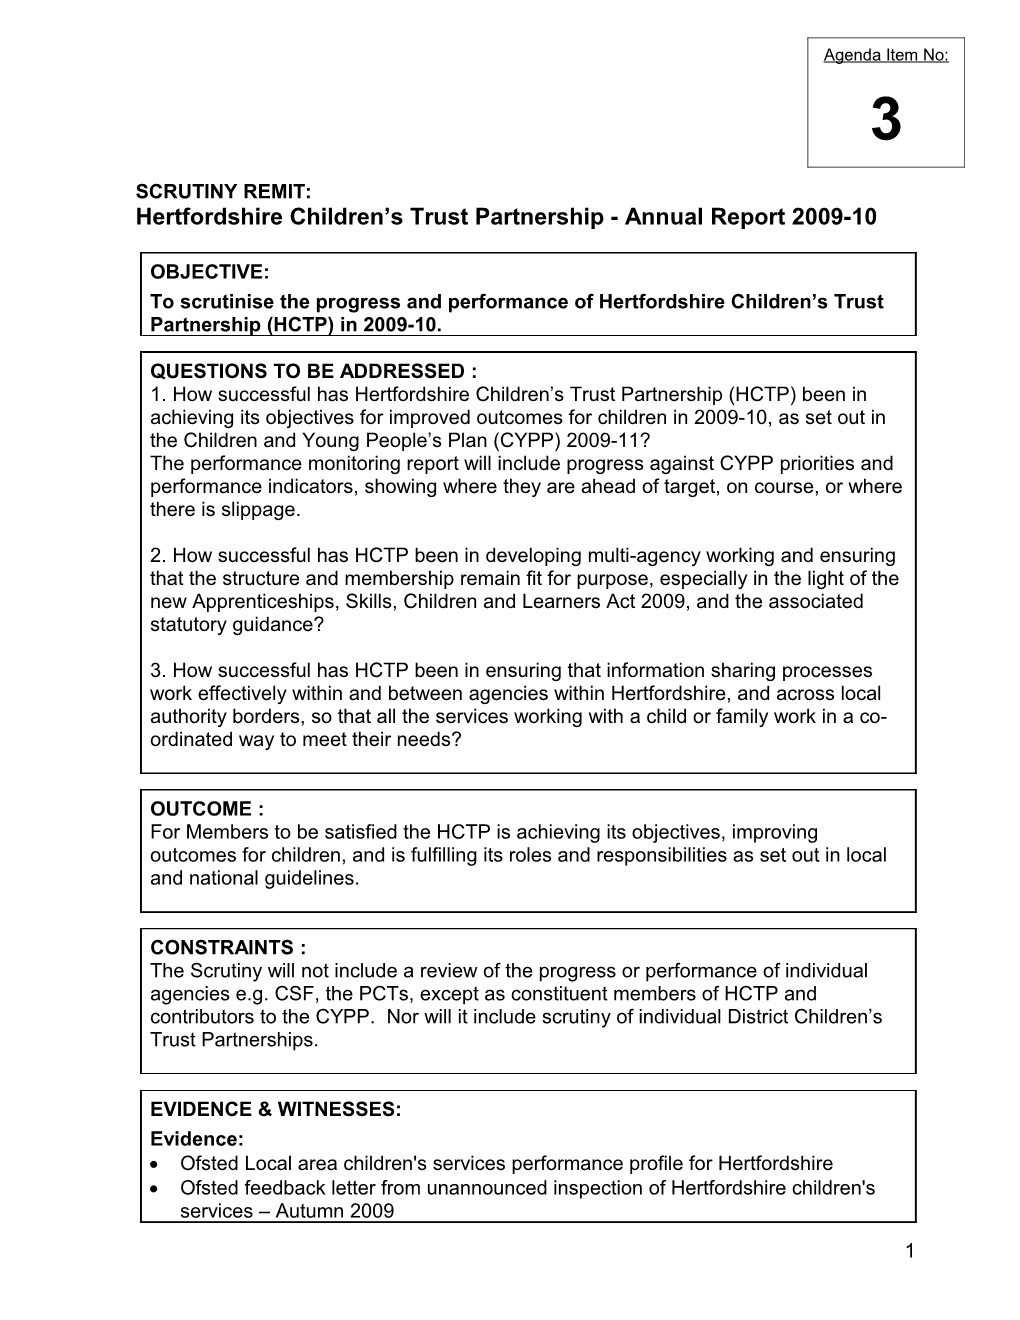 Hertfordshire Children's Trust Partnership Topic Group 117 June 2010 Item 3 - Scoping Document